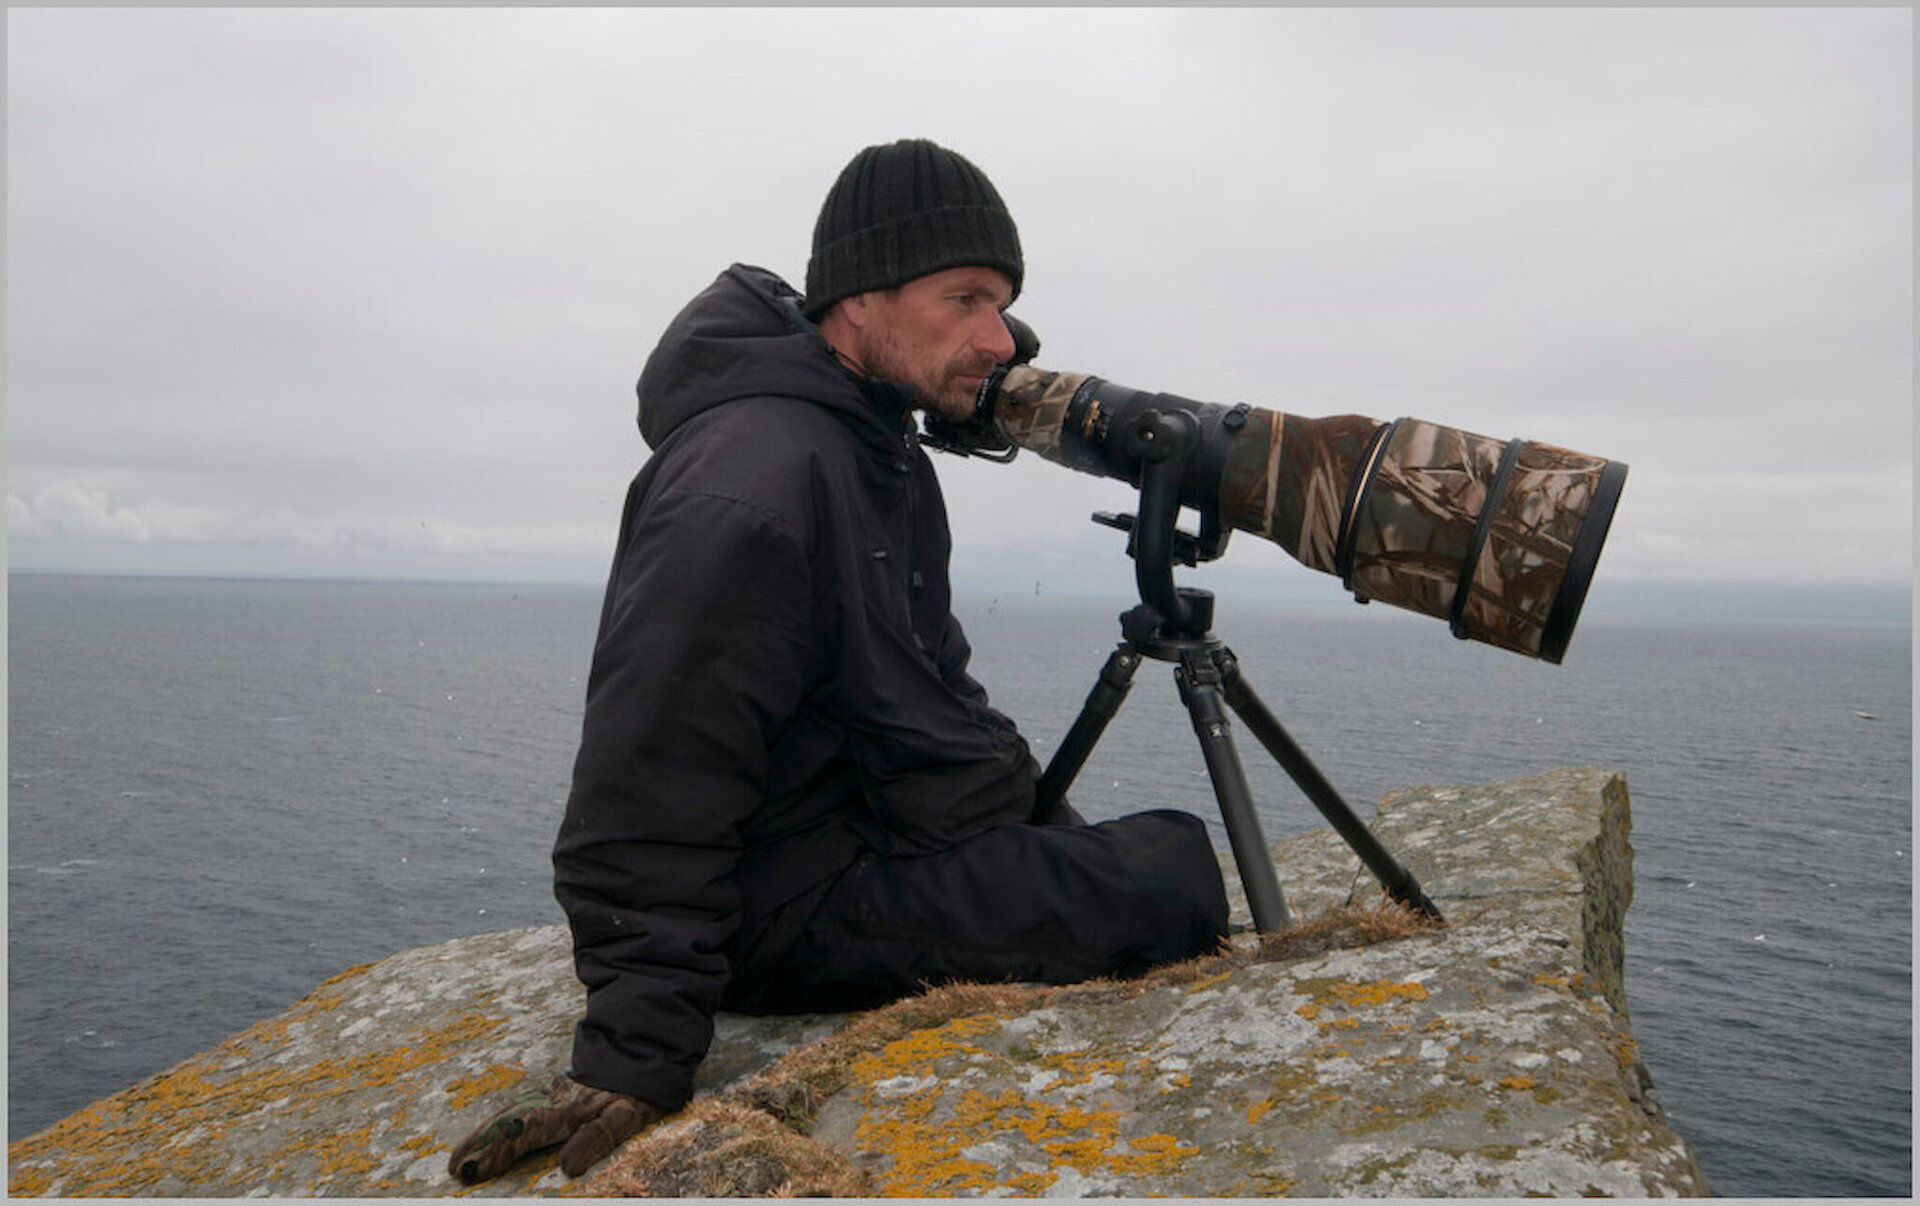 Richard Shucksmith on the lookout for marine wildlife in Shetland.